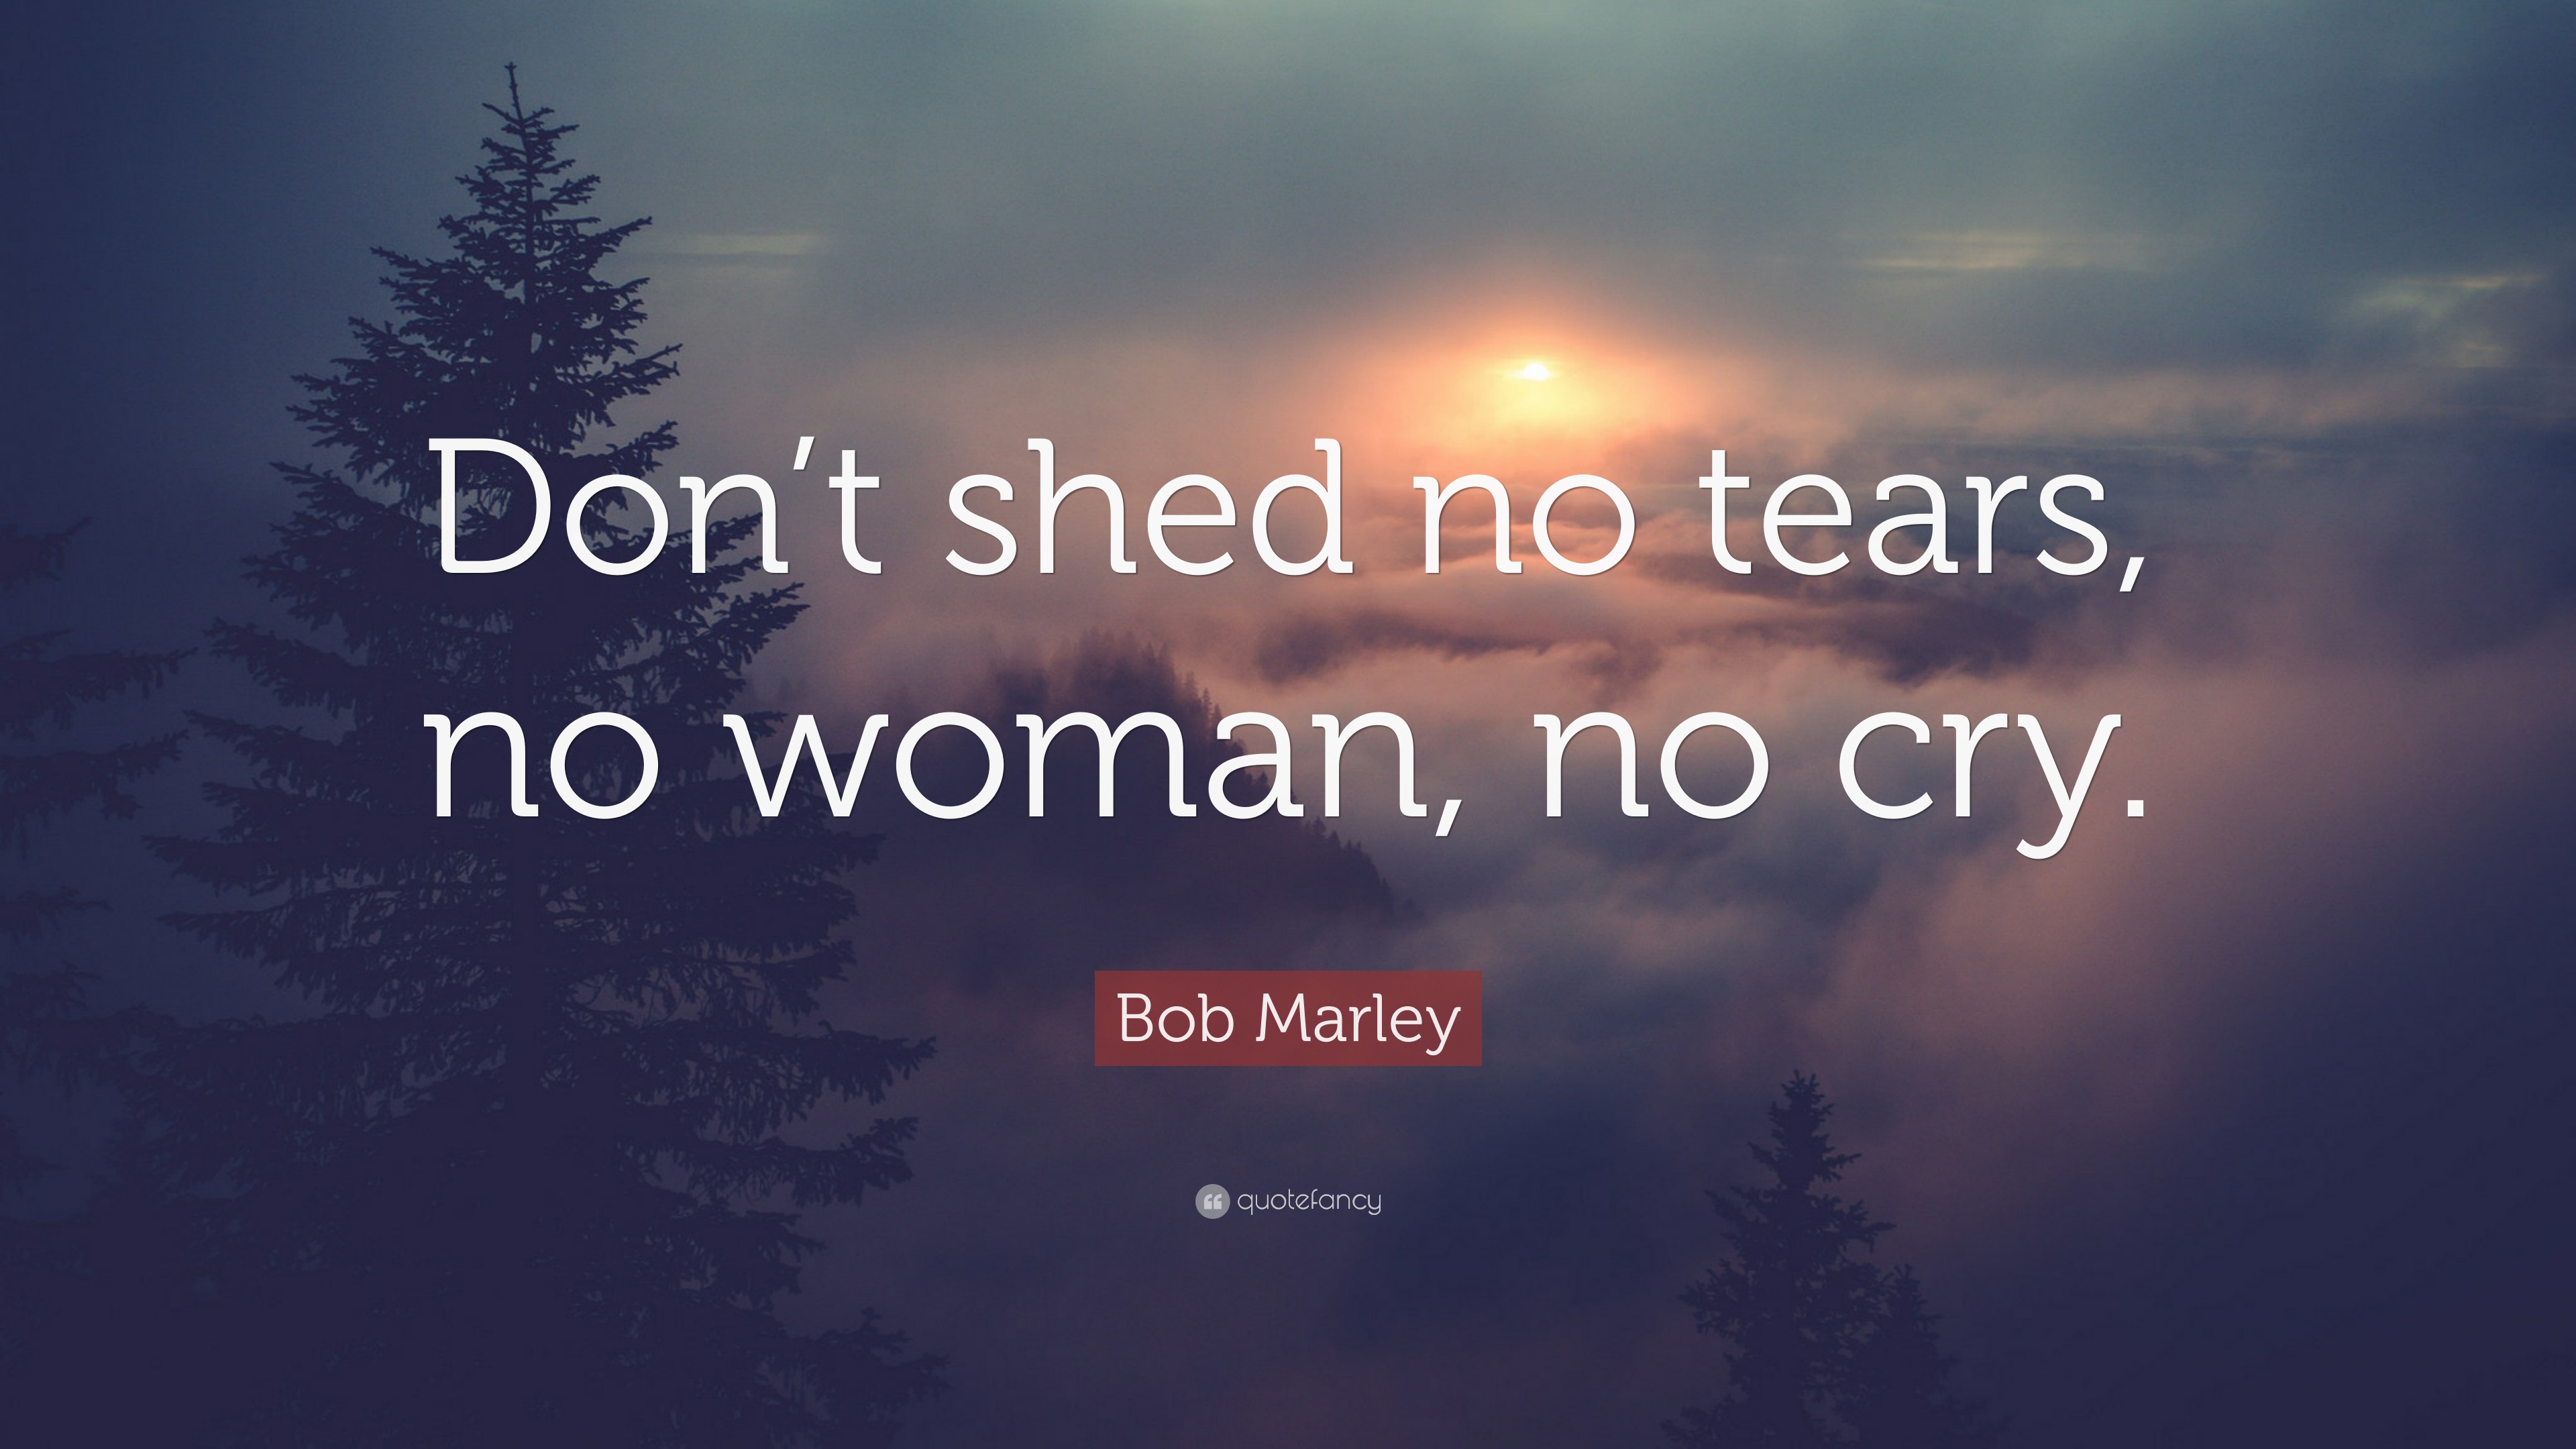 Bob Marley quote: Don't shed no tears, no woman, no cry.